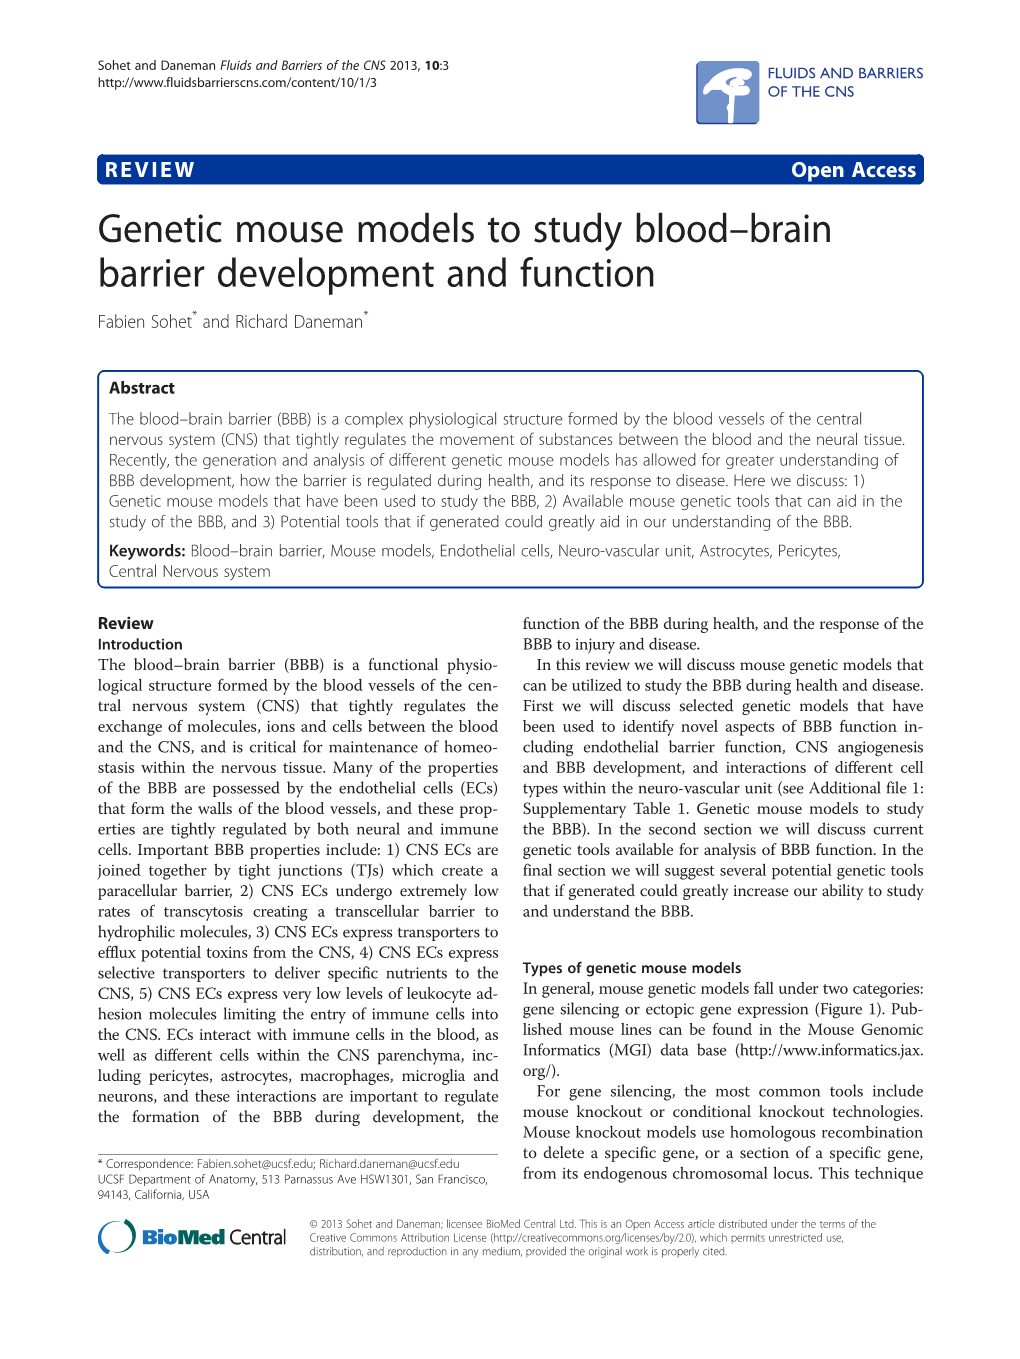 Genetic Mouse Models to Study Blood-Brain Barrier Development